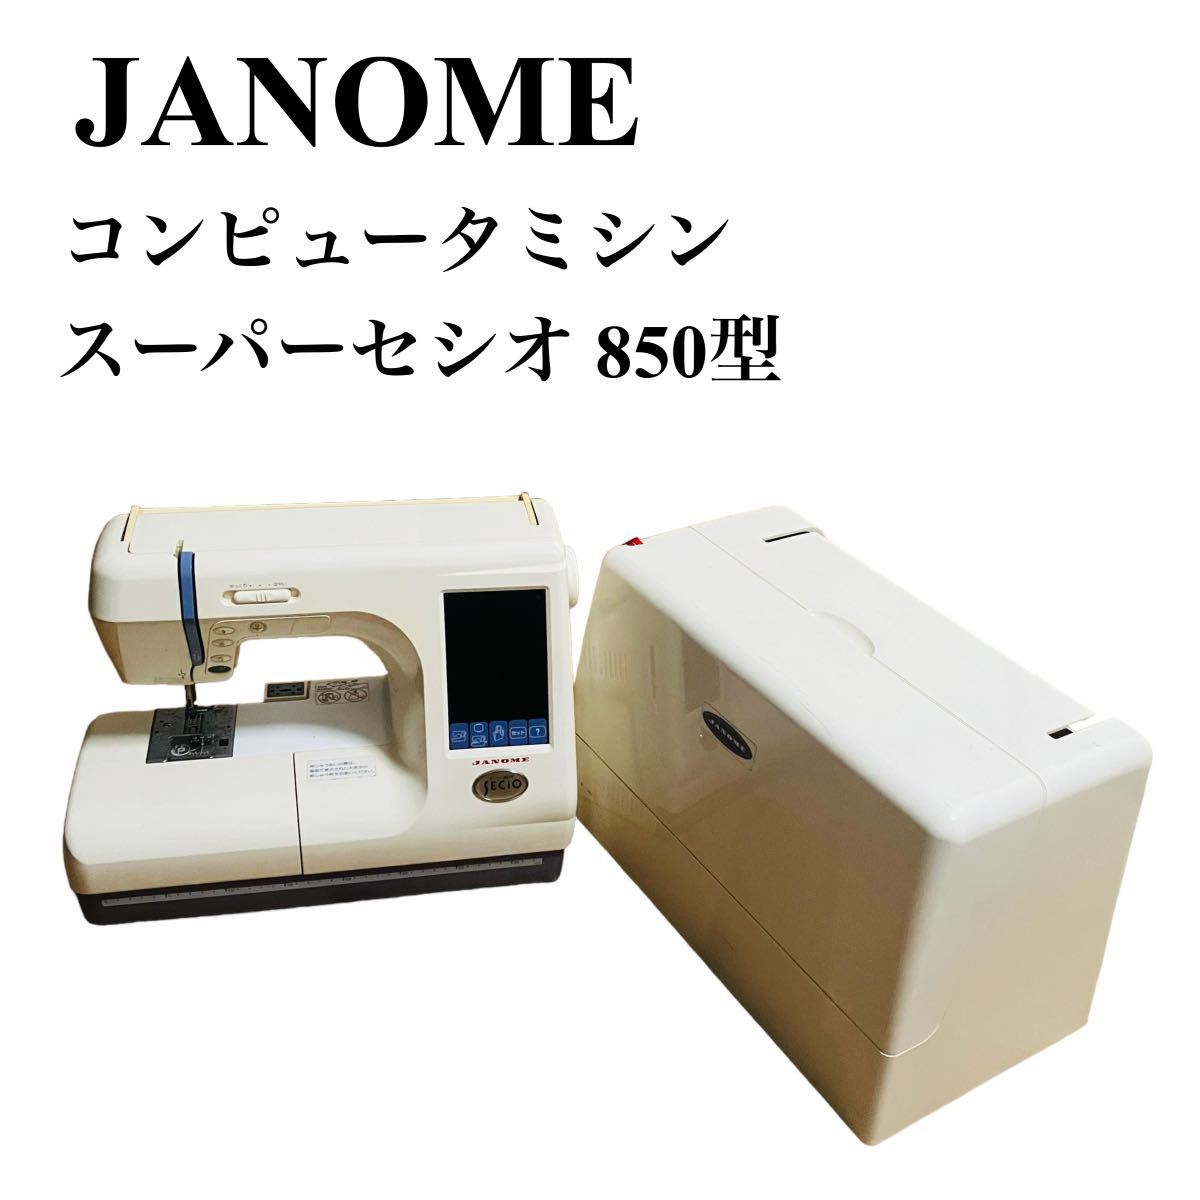 JANOME ジャノメ コンピュータミシン スーパーセシオ 850型 secio 日本製 ハンドクラフト 手工芸 通電ok 説明書付き